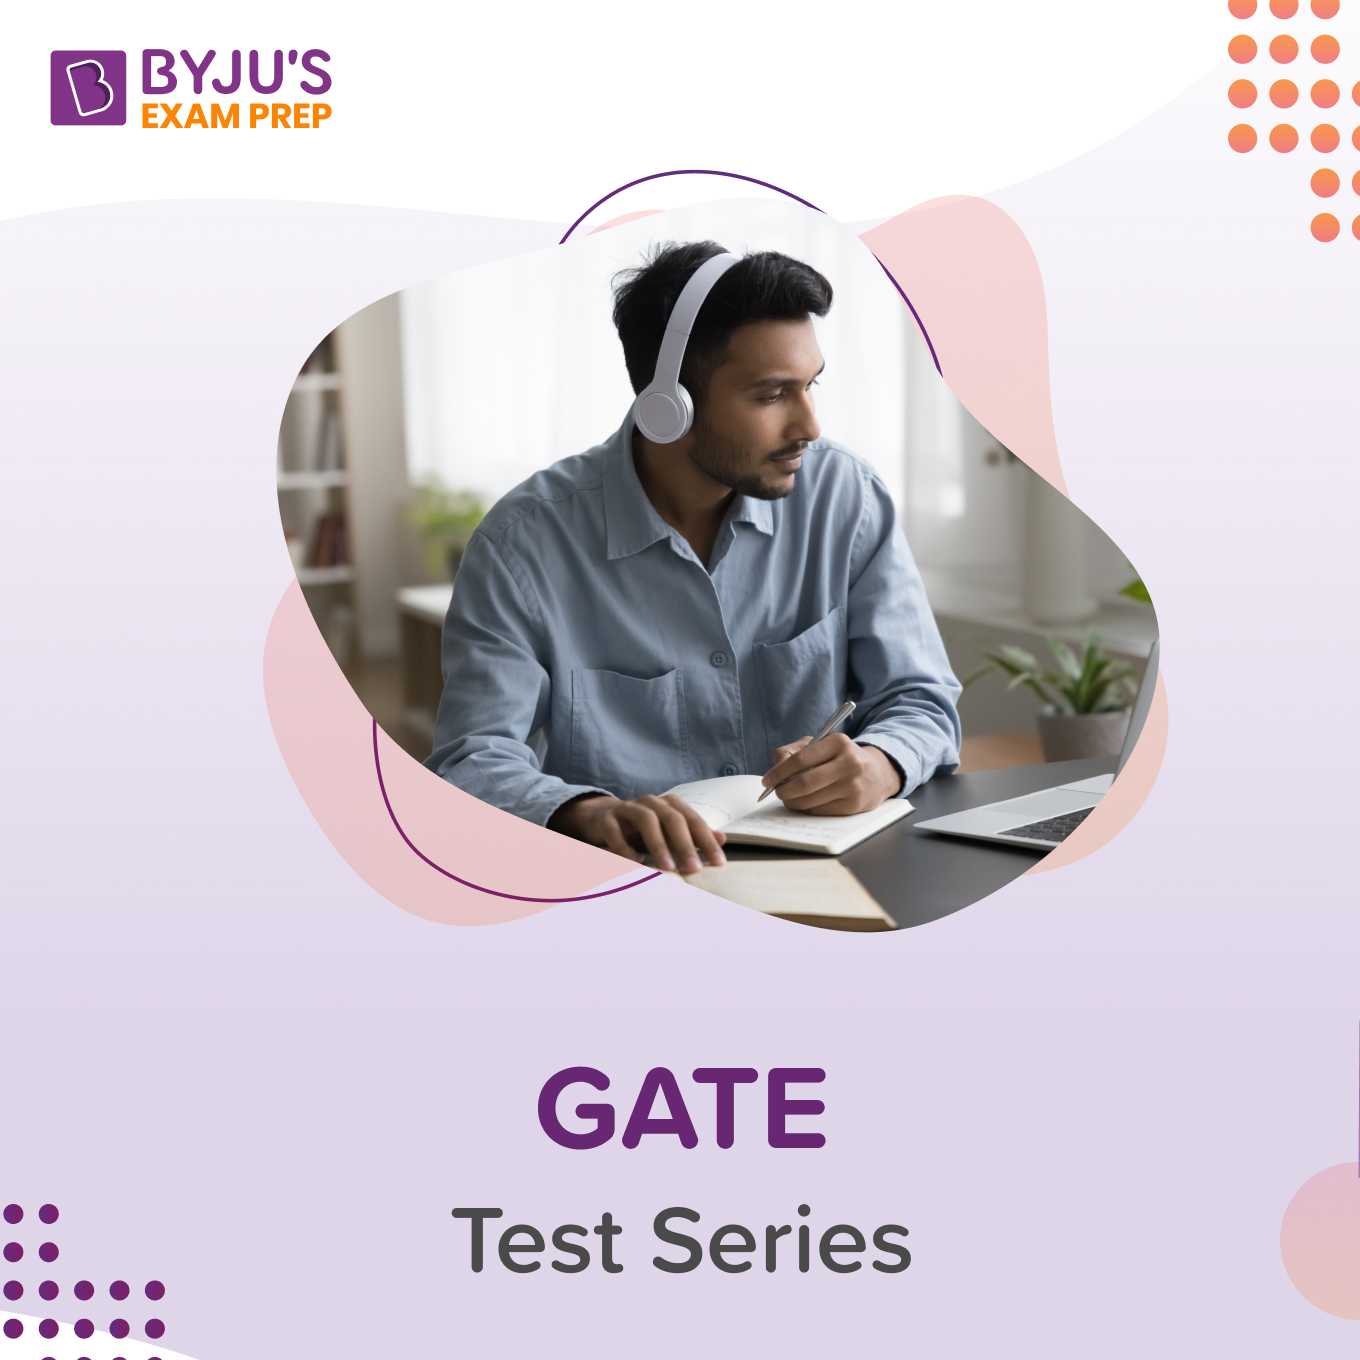 GATE - Test Series